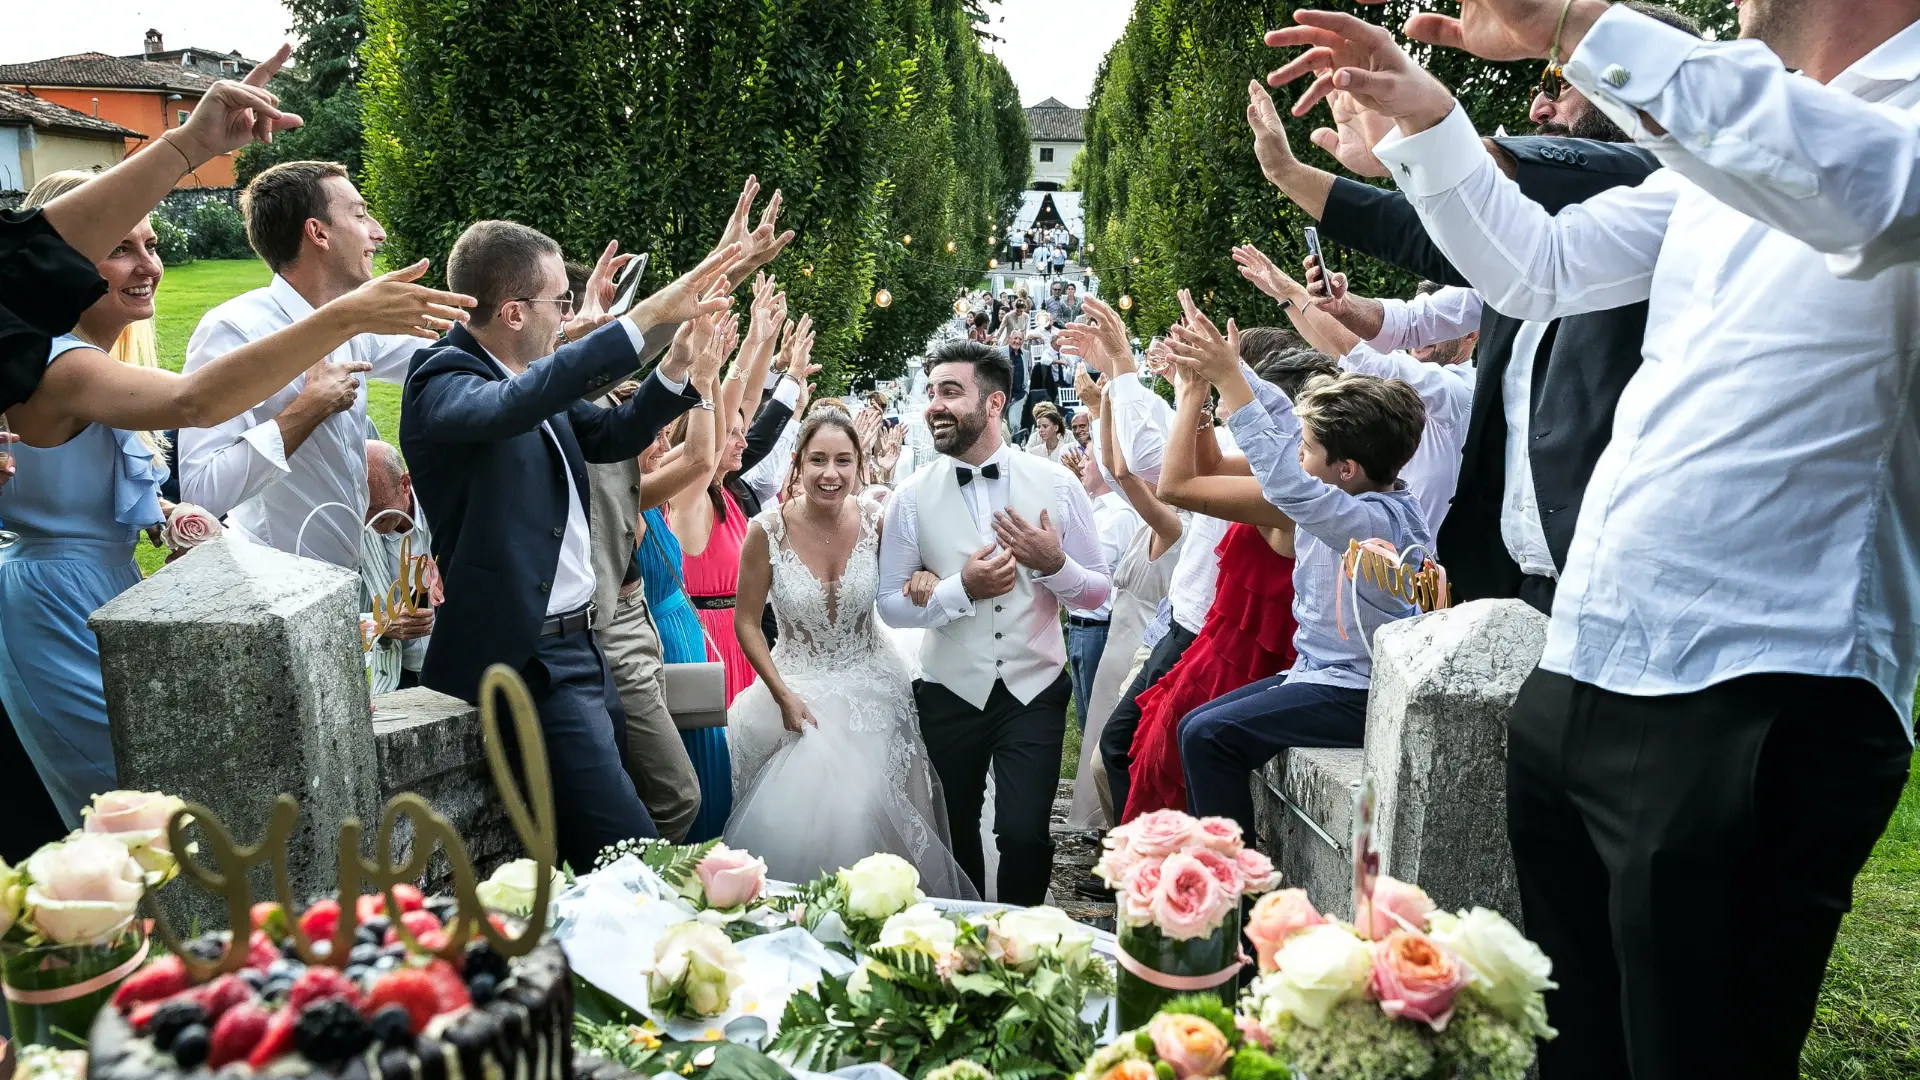 A large celebration at a Wedding